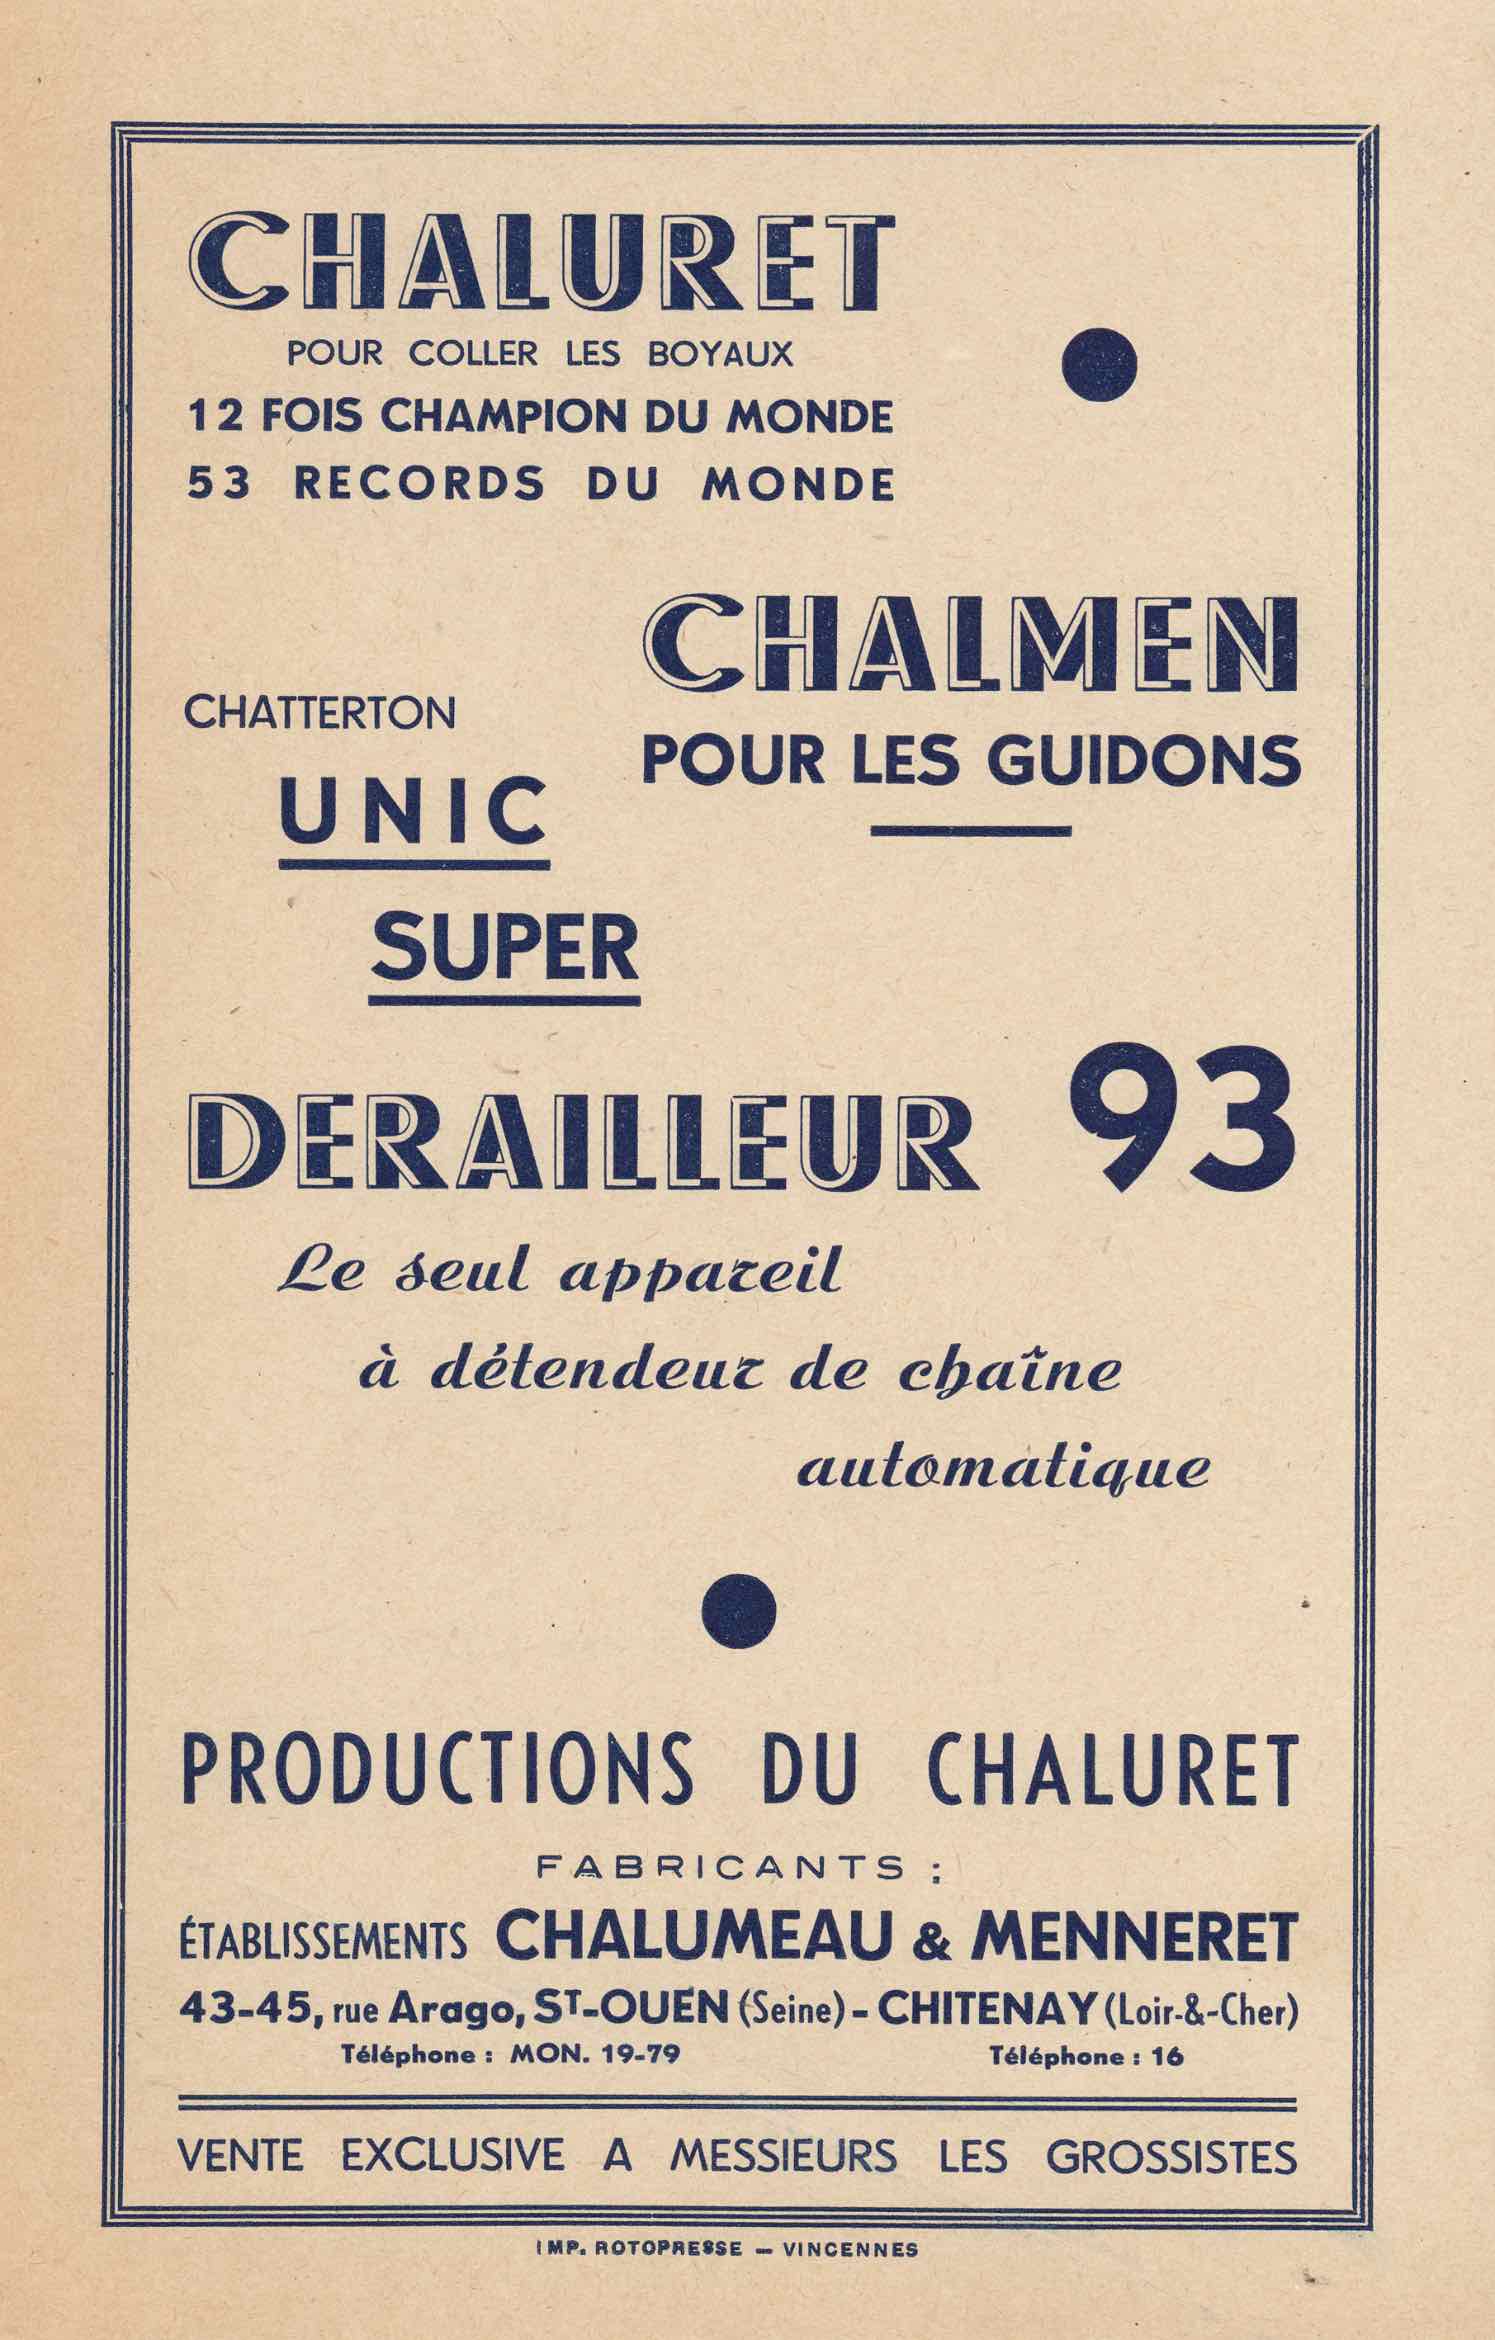 Chaluret flyer - 1949? main image